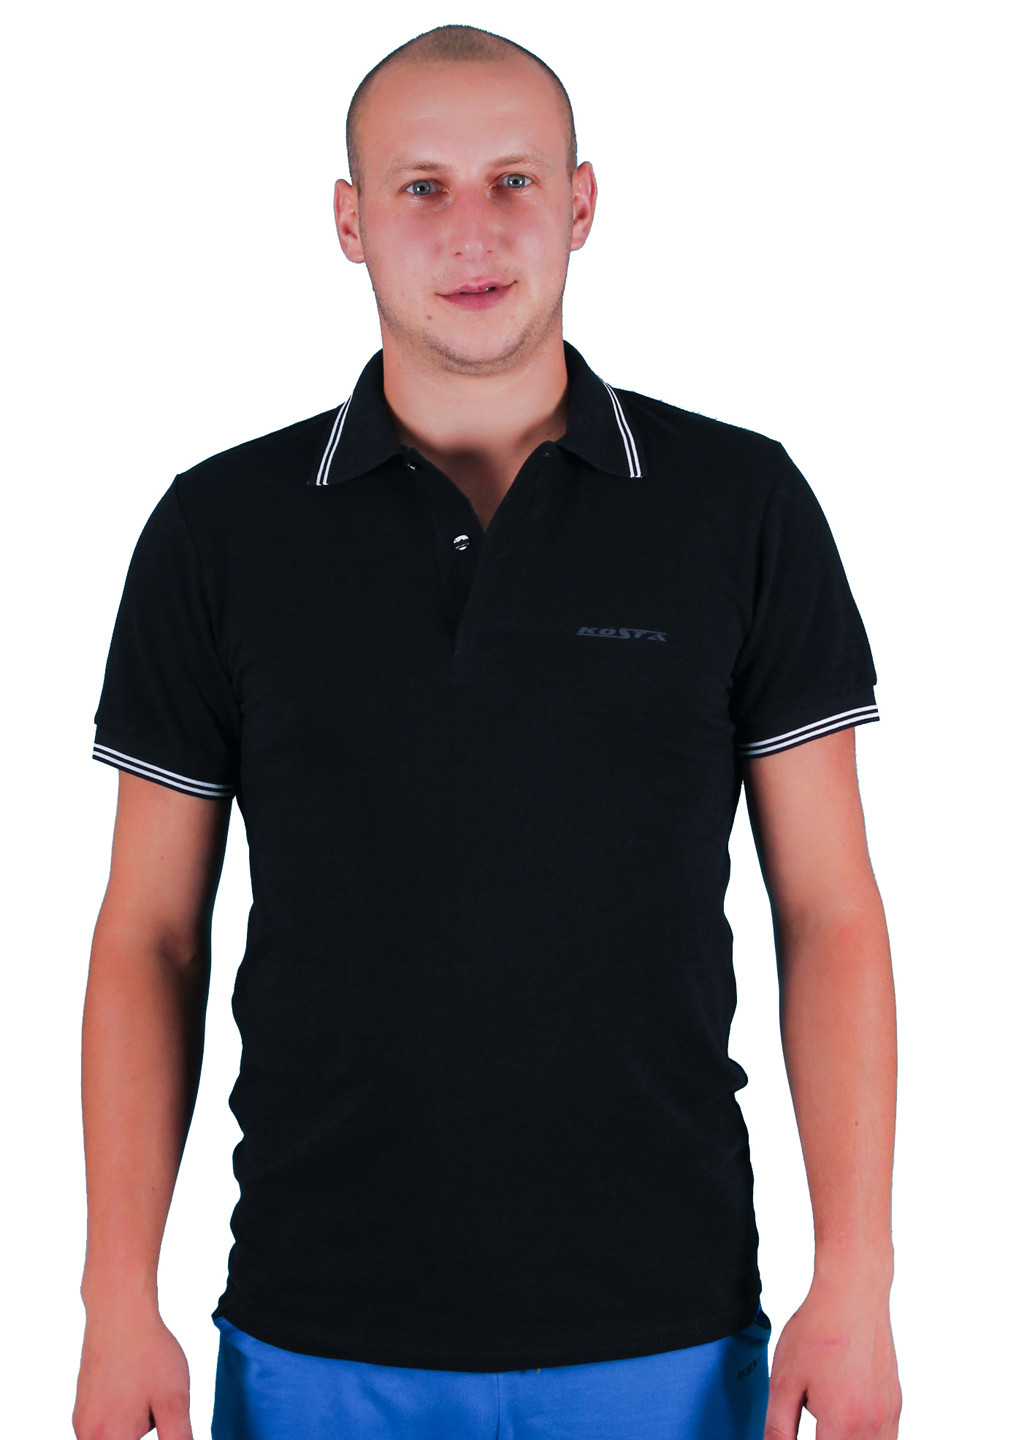 Черная футболка-поло для мужчин Kosta